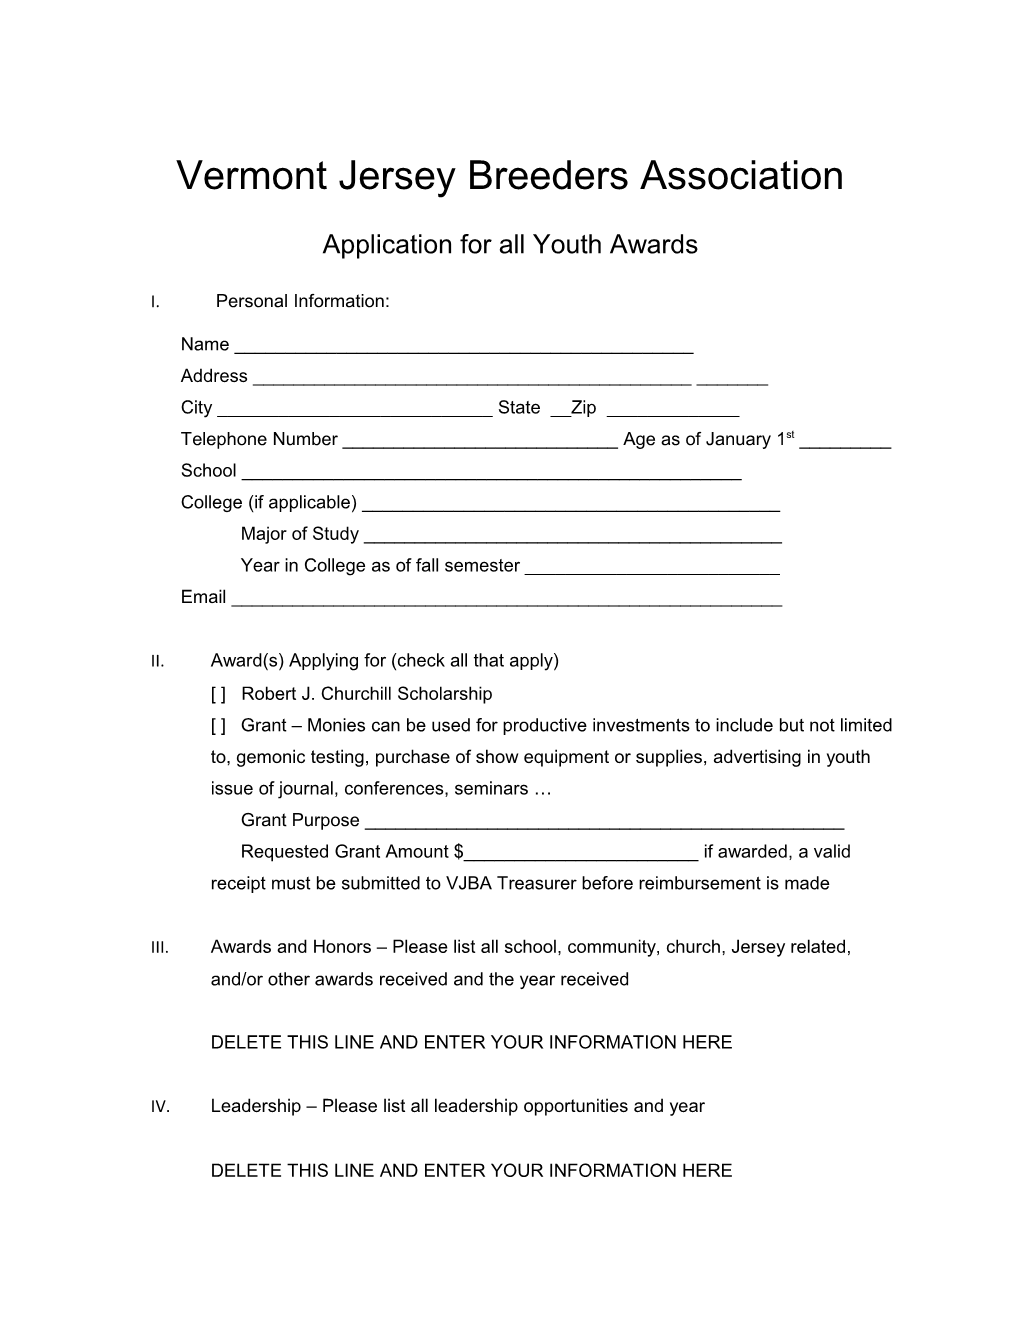 Vermont Jersey Breeders Association